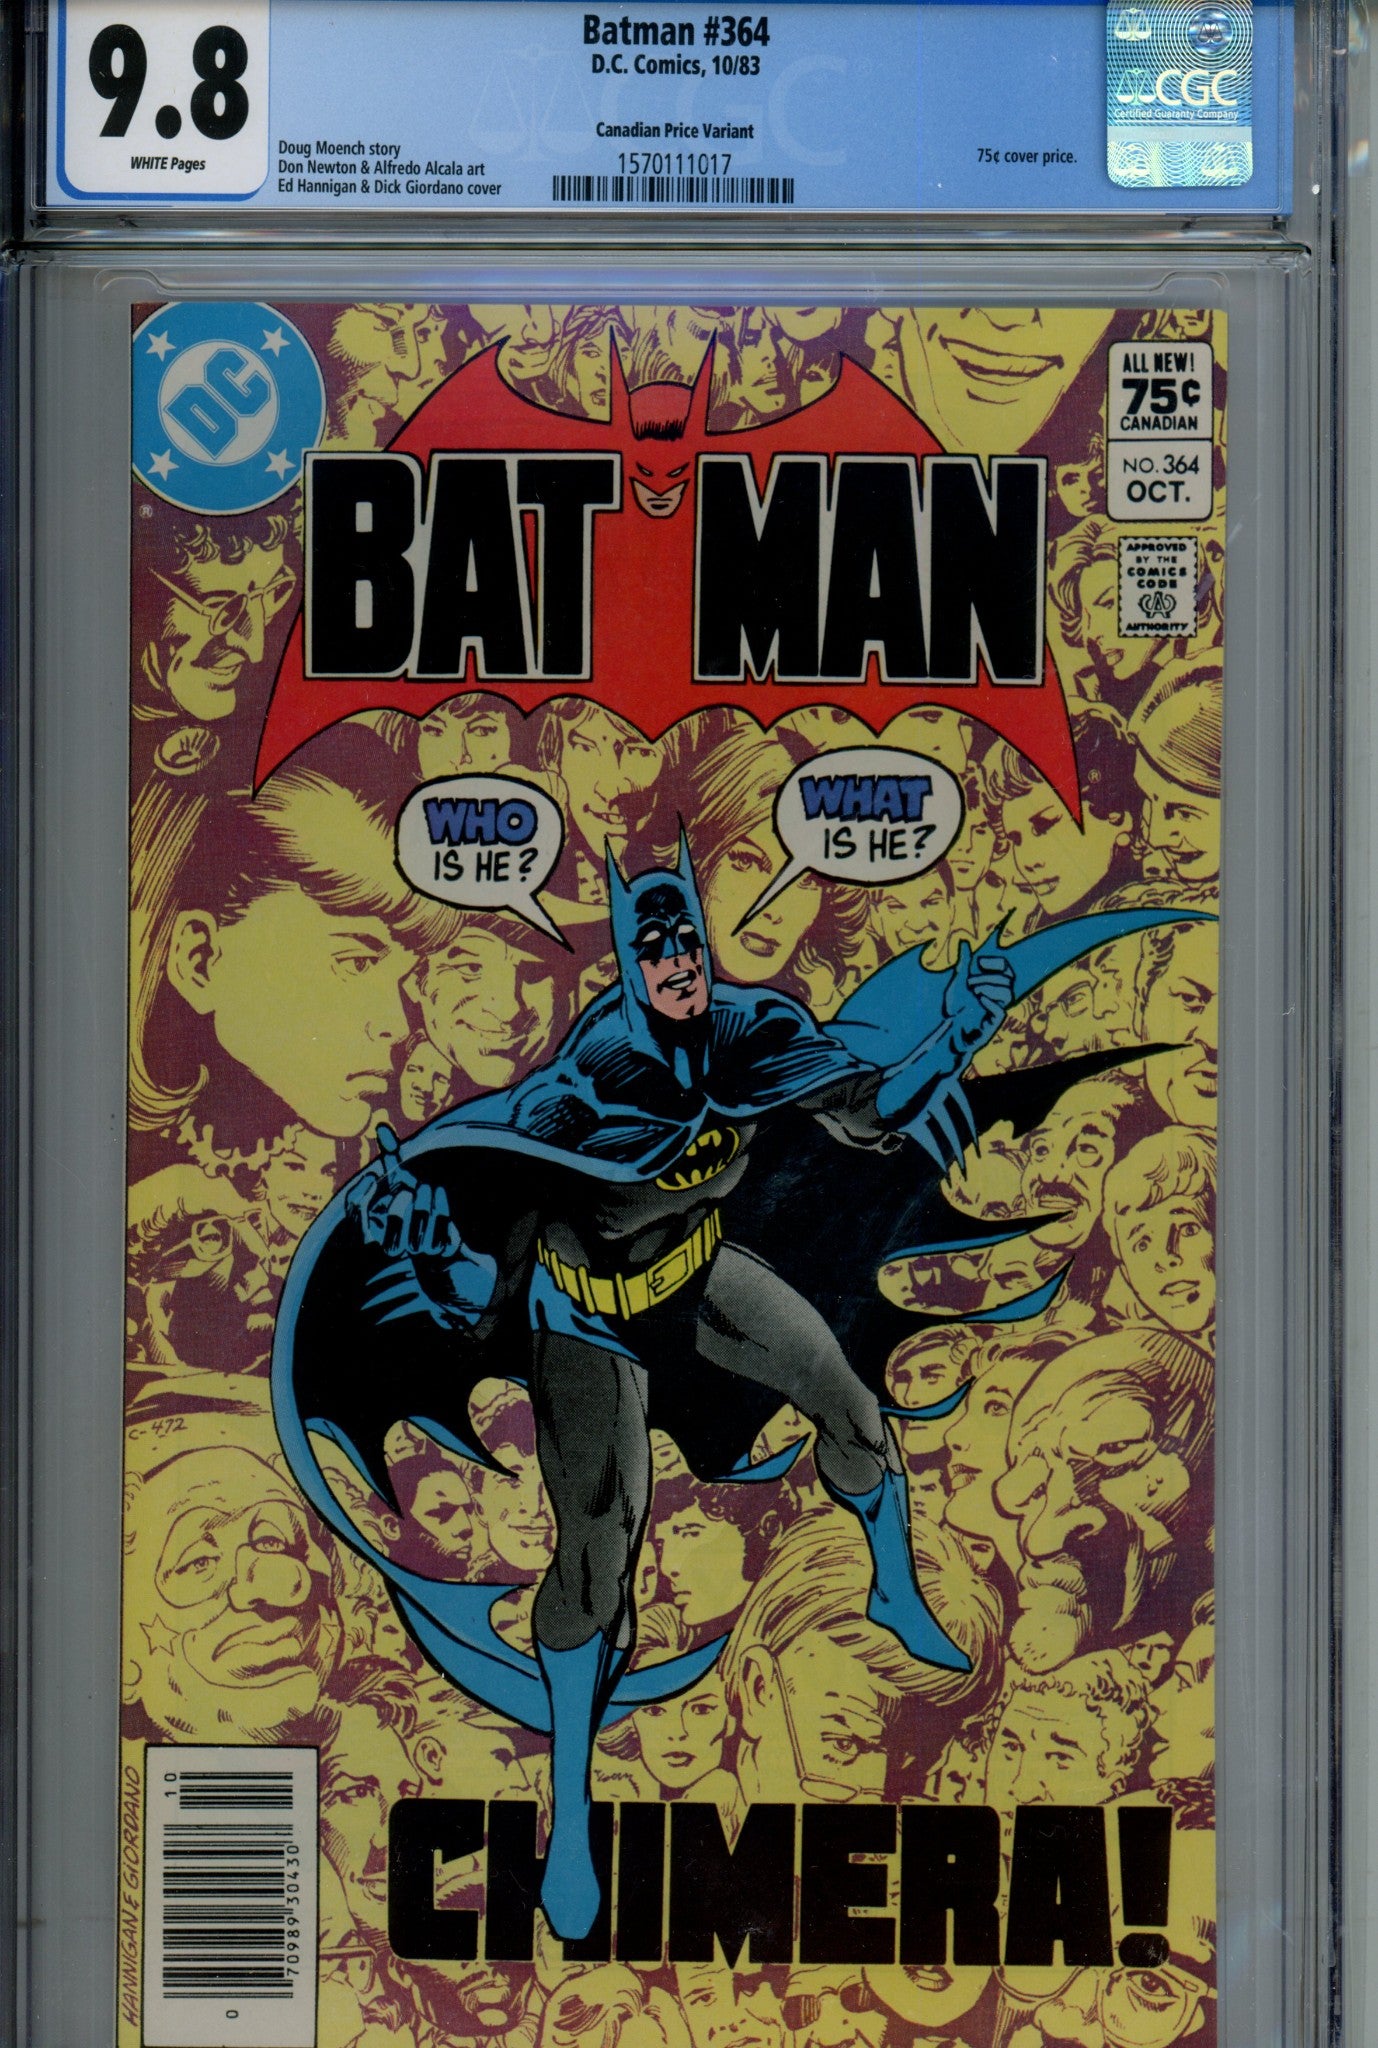 Batman Vol 1 364 Canadian Price Variant CGC 9.8 (1983)